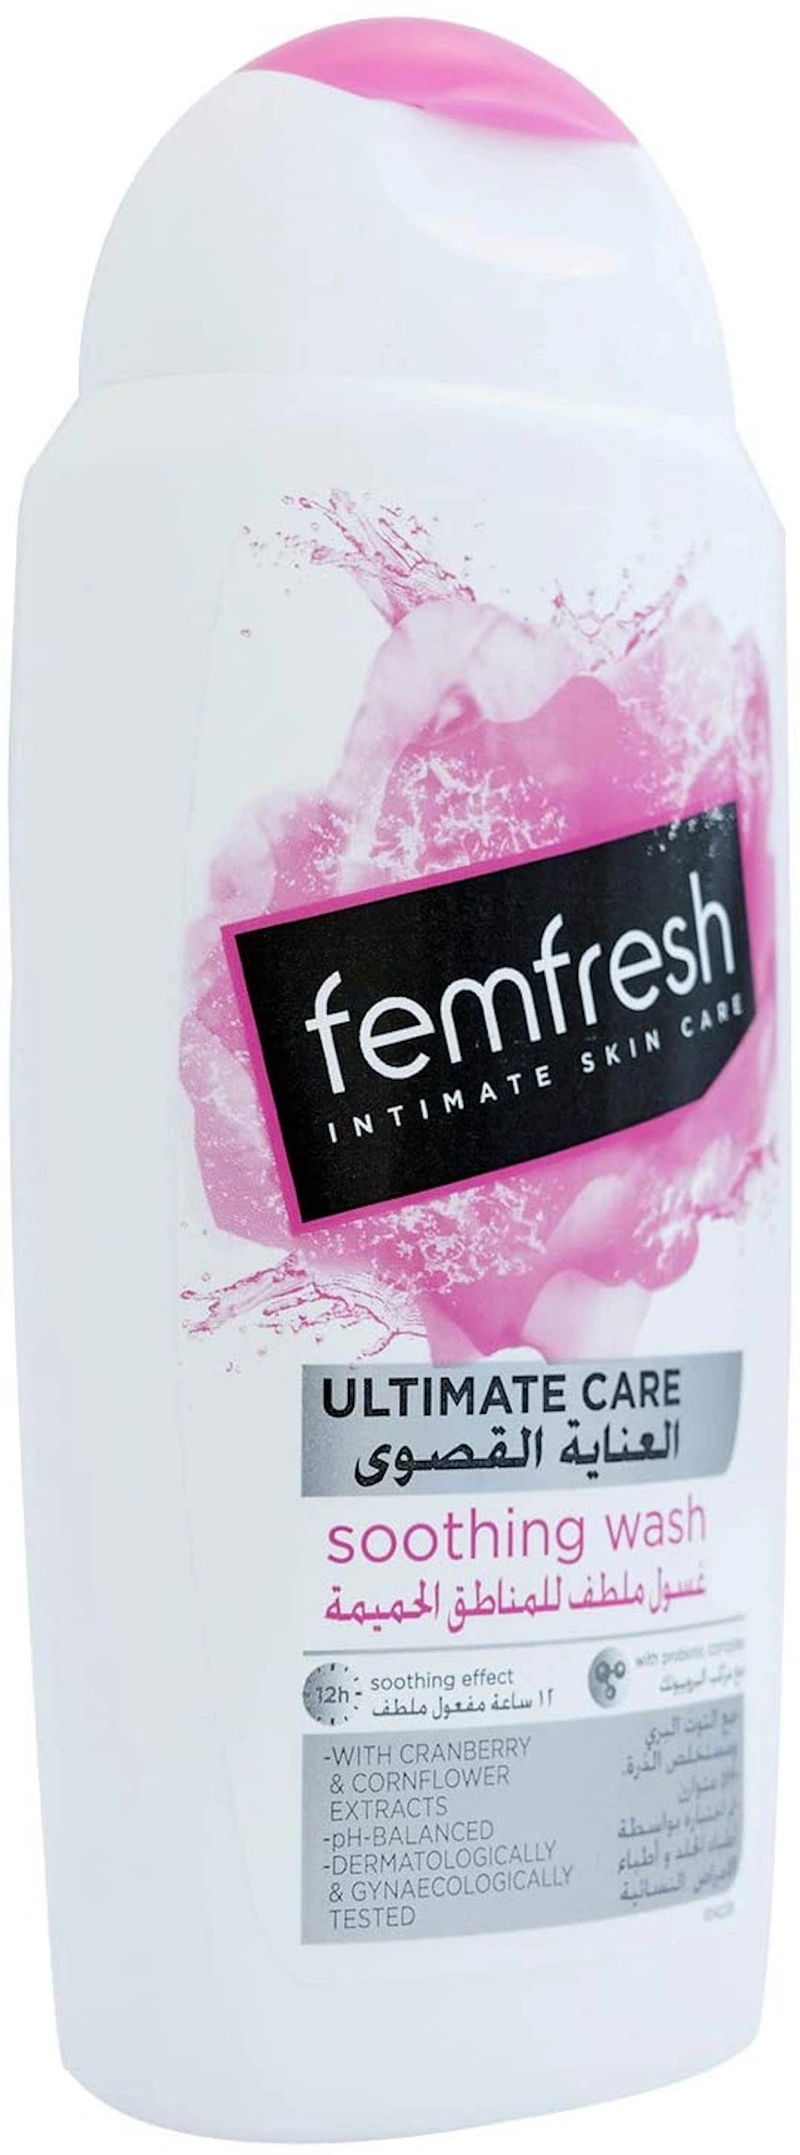 Femfresh Intimate Skincare Ultimate Care Soothing Wash, 250ml by Femfresh